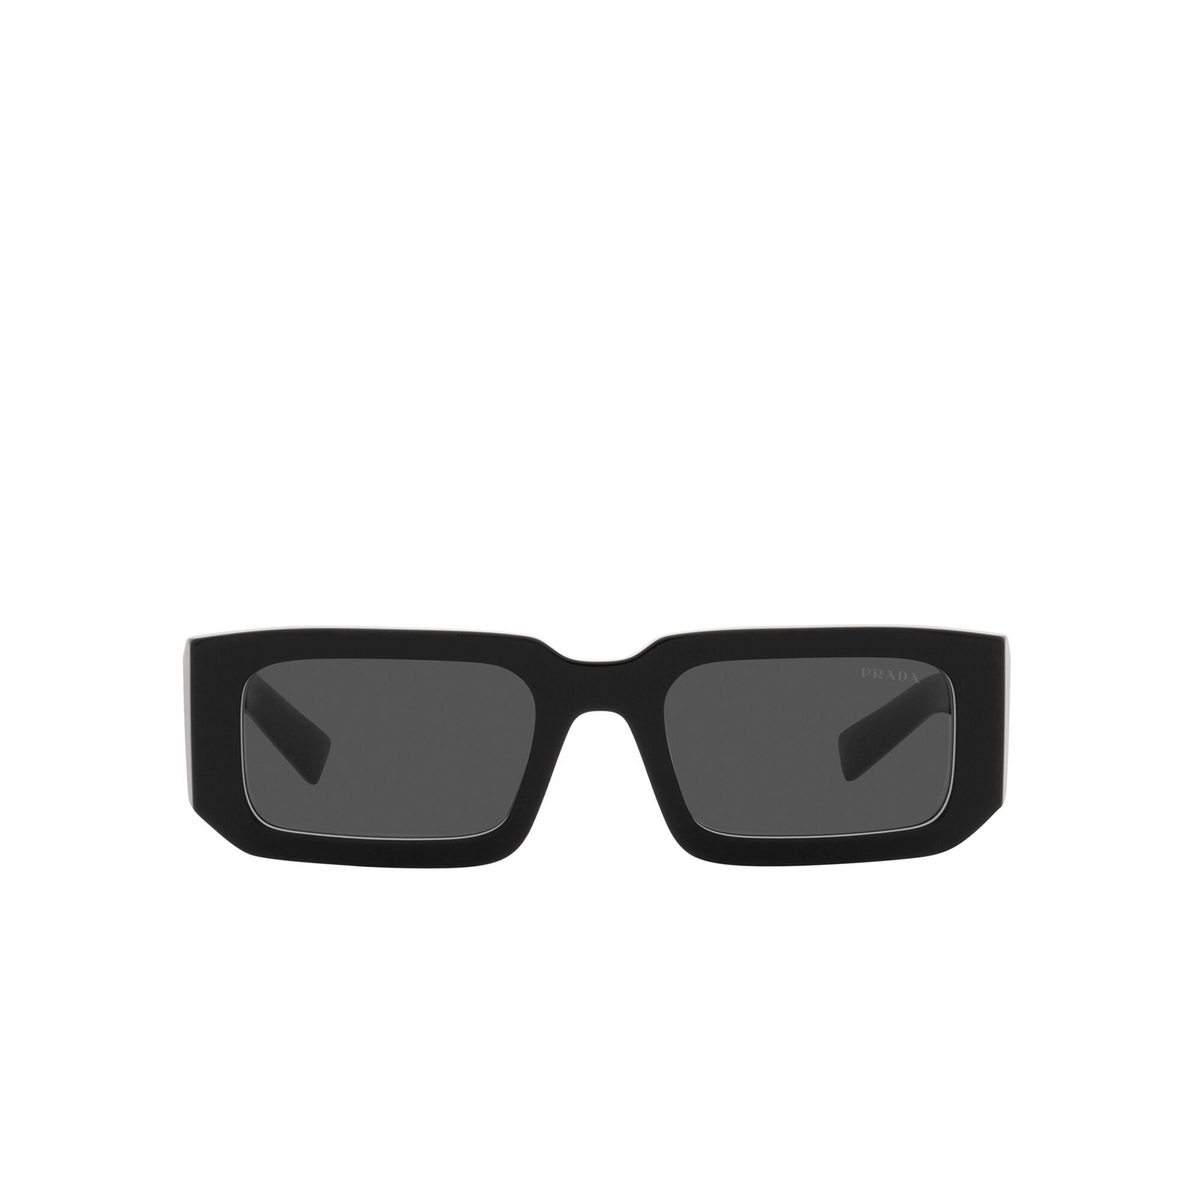 Prada® Rectangle Sunglasses: PR 06YS color Black / White 09Q5S0 - front view.